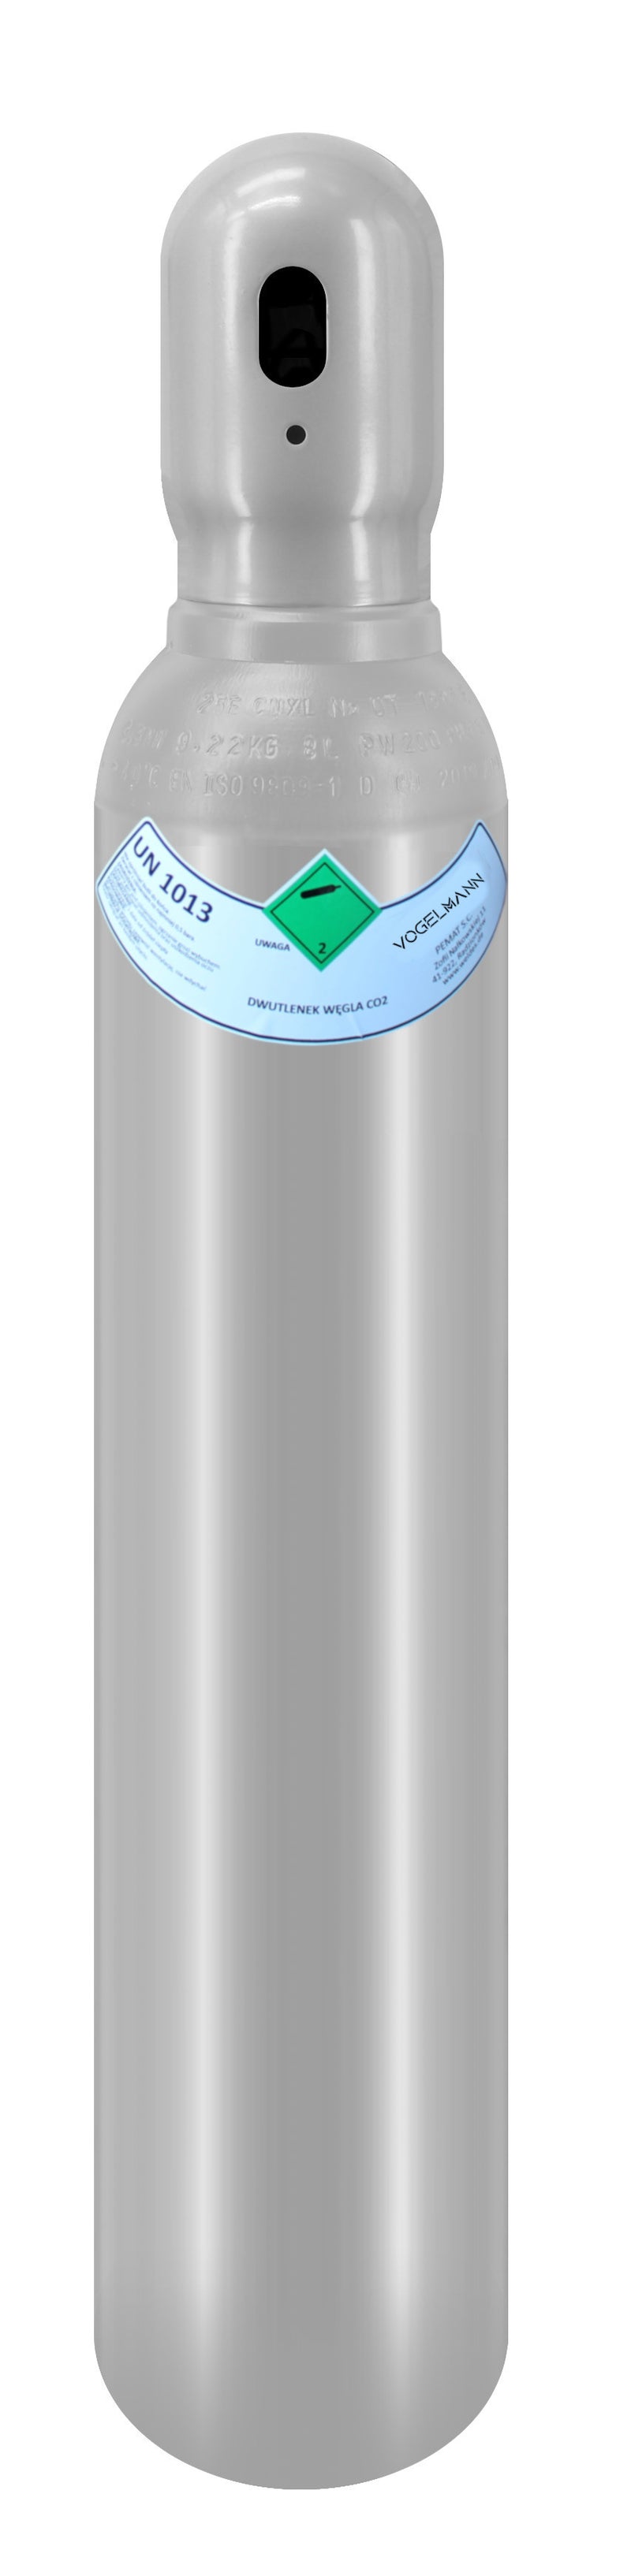 CO2 full gas cylinder 8L 1,5m3 with Regulator Exakt Vogelmann